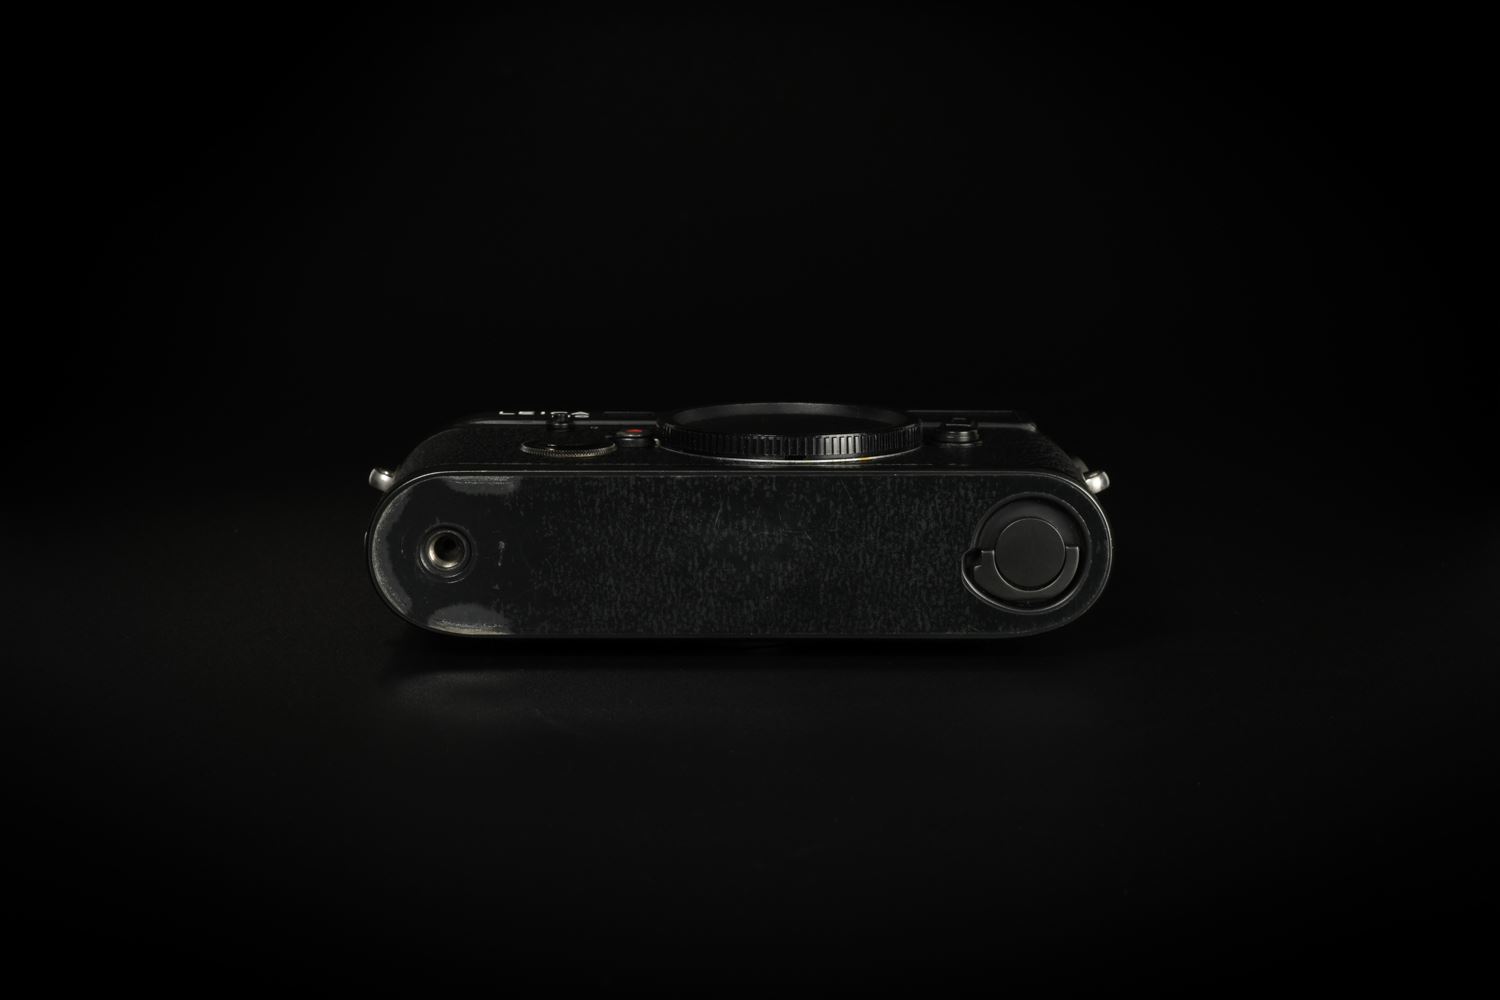 Picture of Leica M6 Classic 0.72 Black